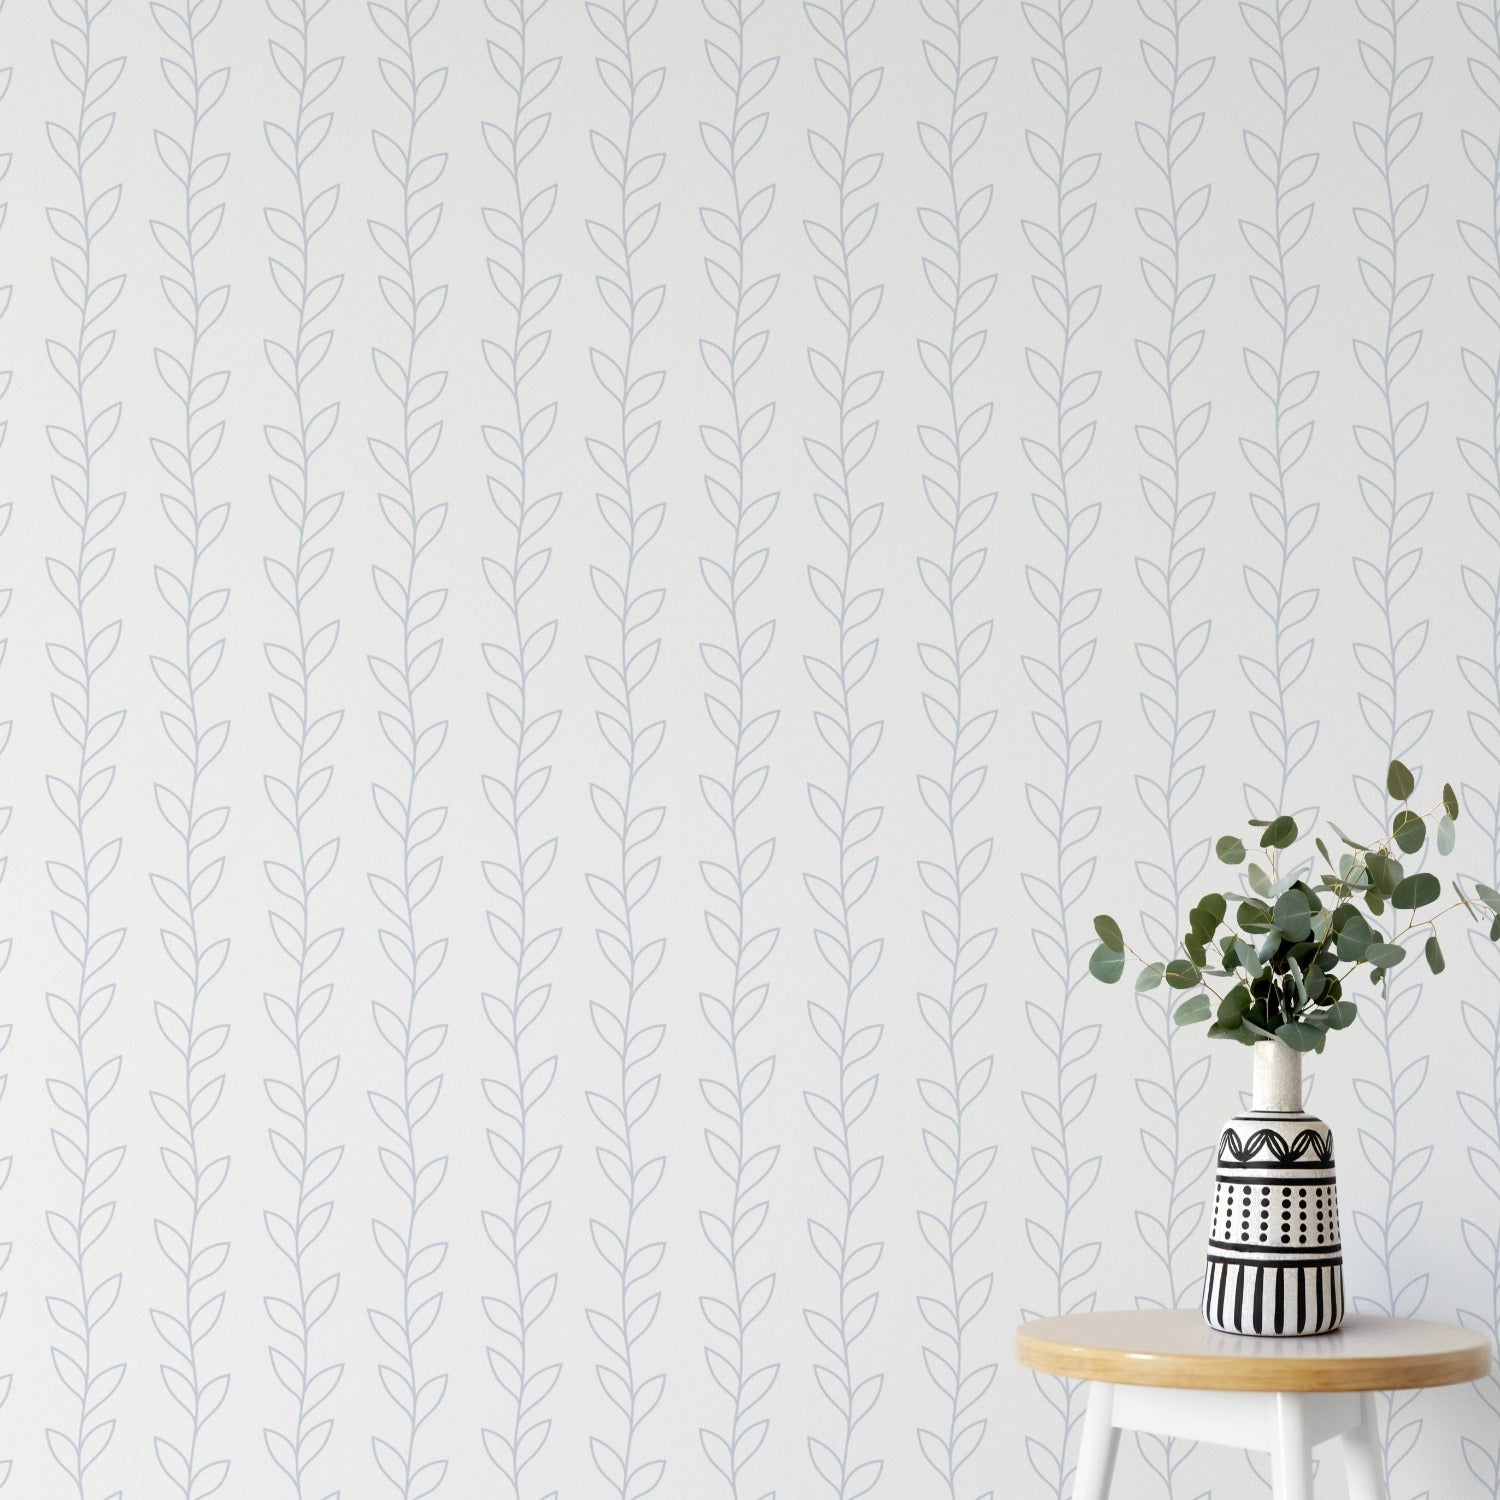 Elegant Gray Leaf Pattern Wallpaper in Contemporary Living Room Setting